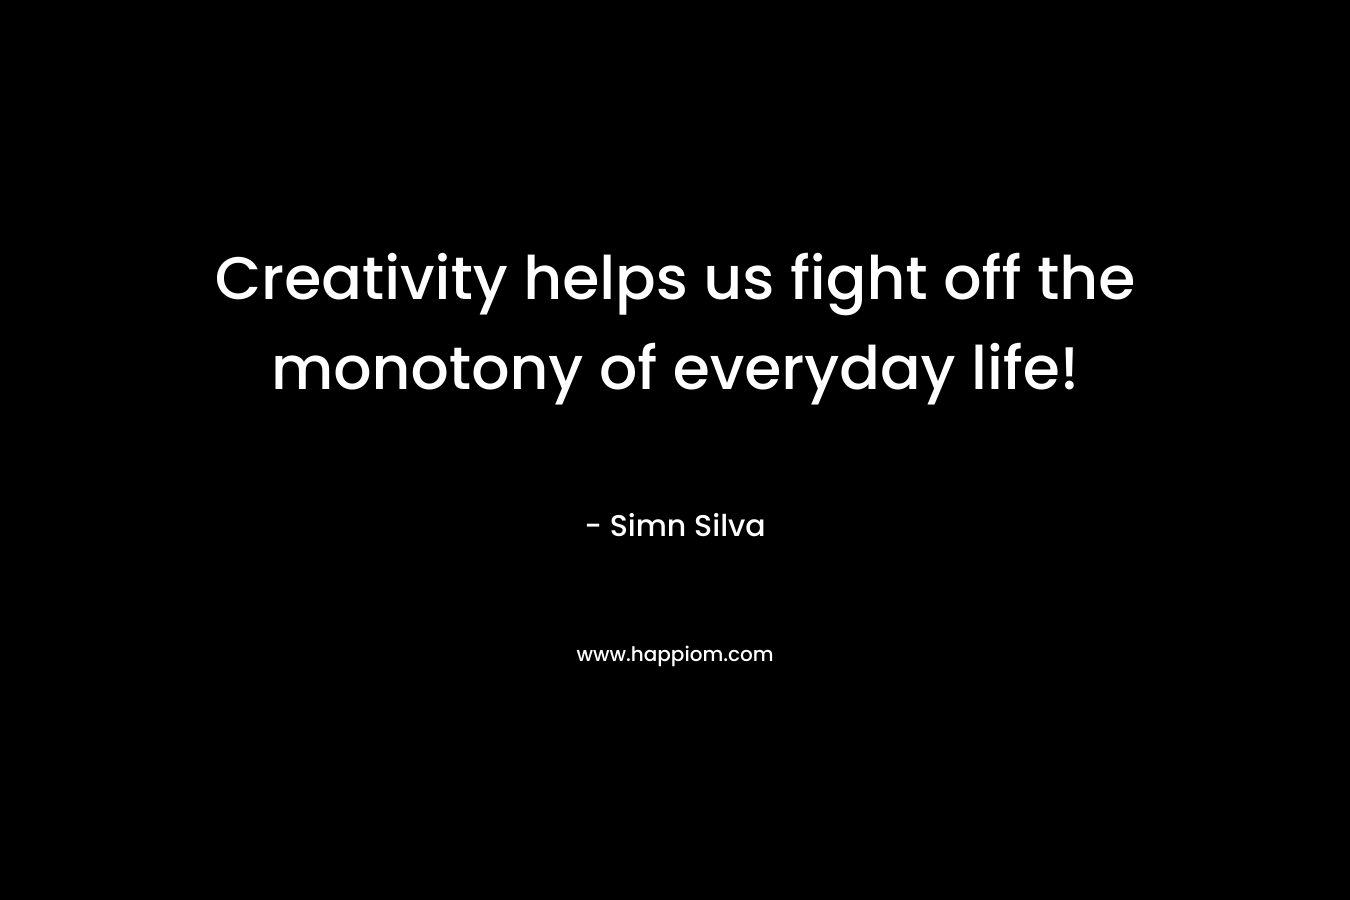 Creativity helps us fight off the monotony of everyday life!